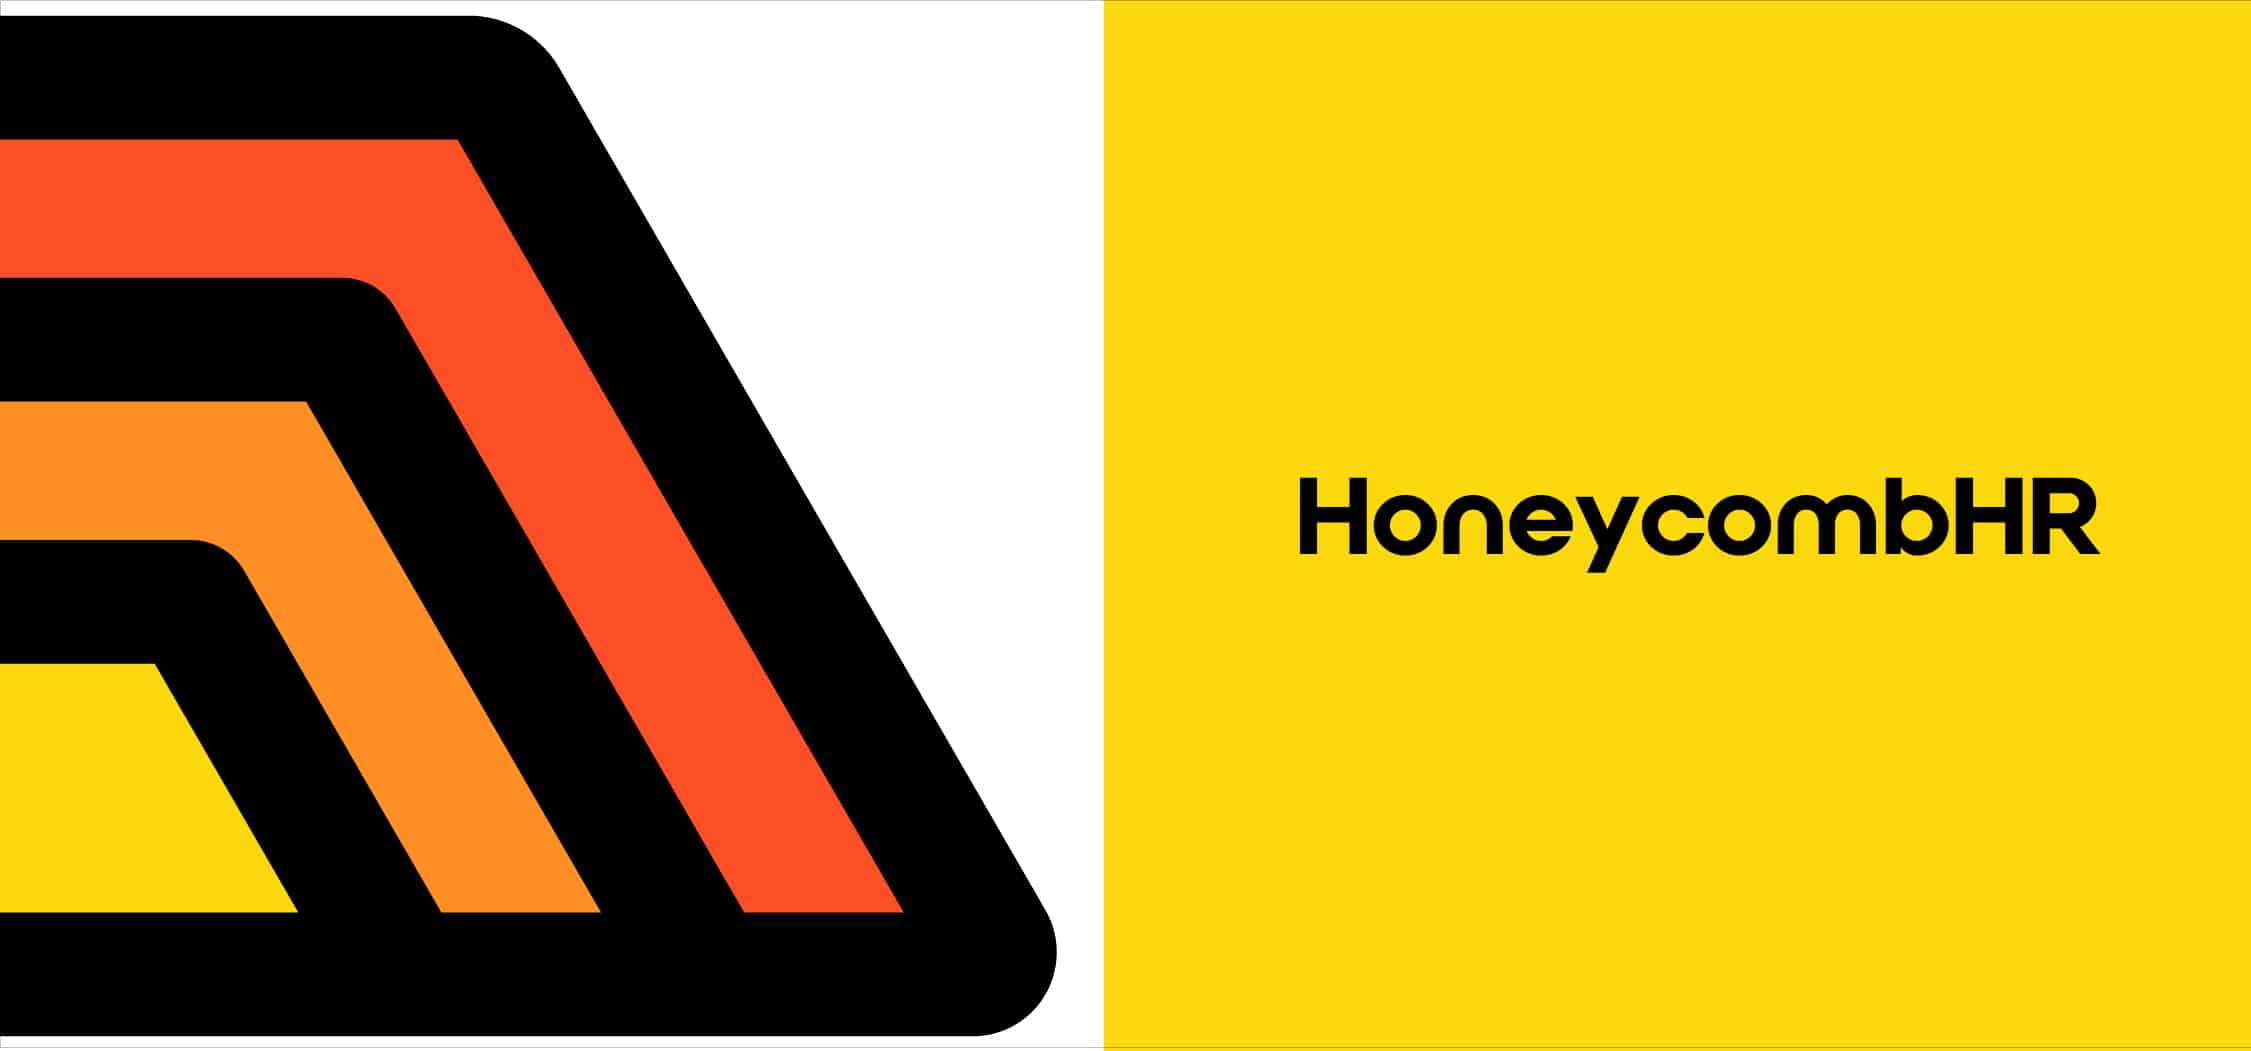 HoneycombHR Branding Details by Stellen Design Branding Agency in Los Angeles CA